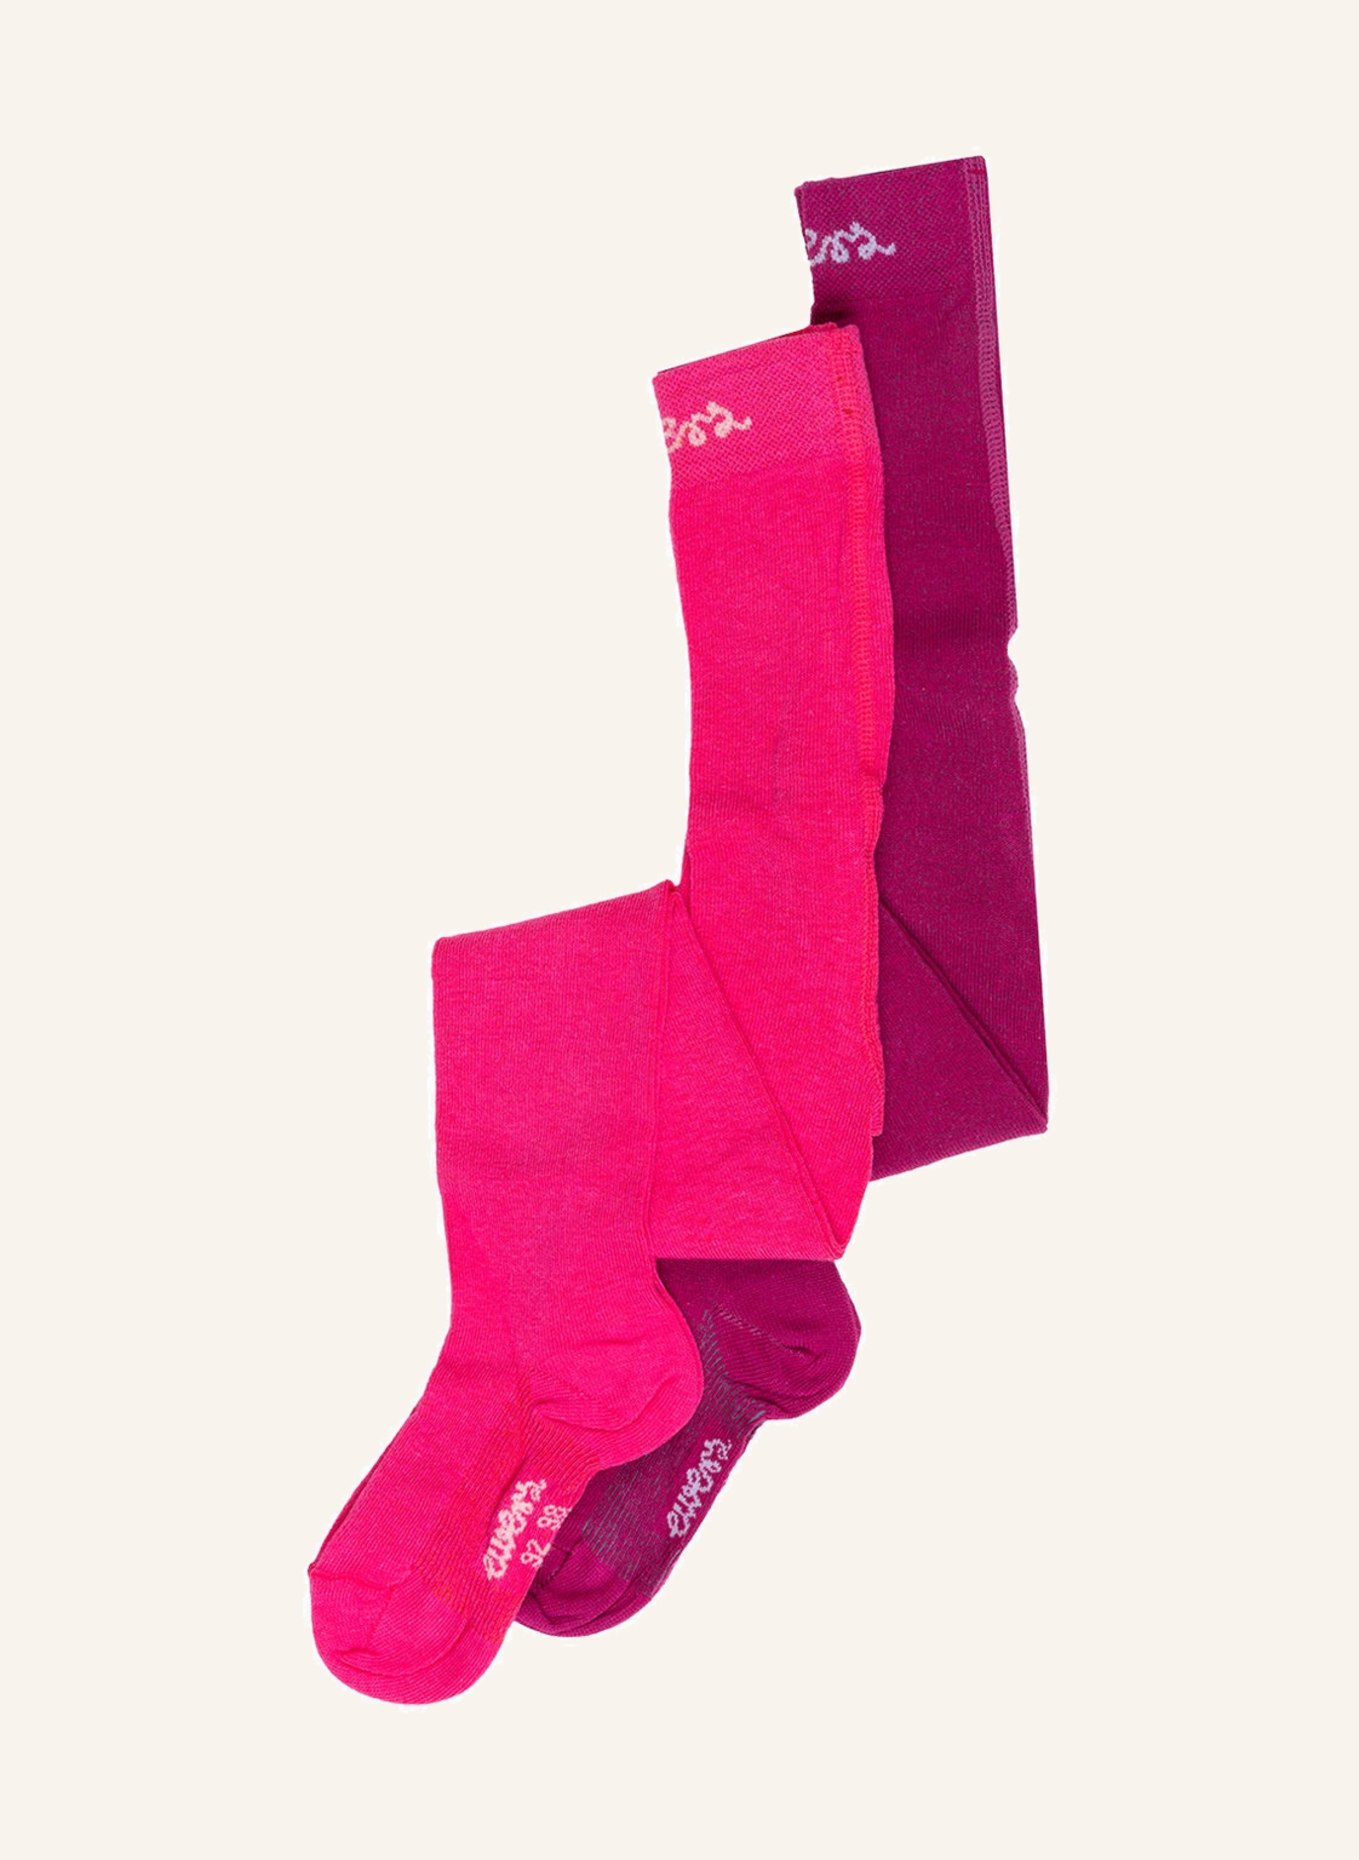 ewers COLLECTION 2er-Pack Strumpfhosen, Farbe: 4 4 pink-phlox (col742/756) (Bild 1)